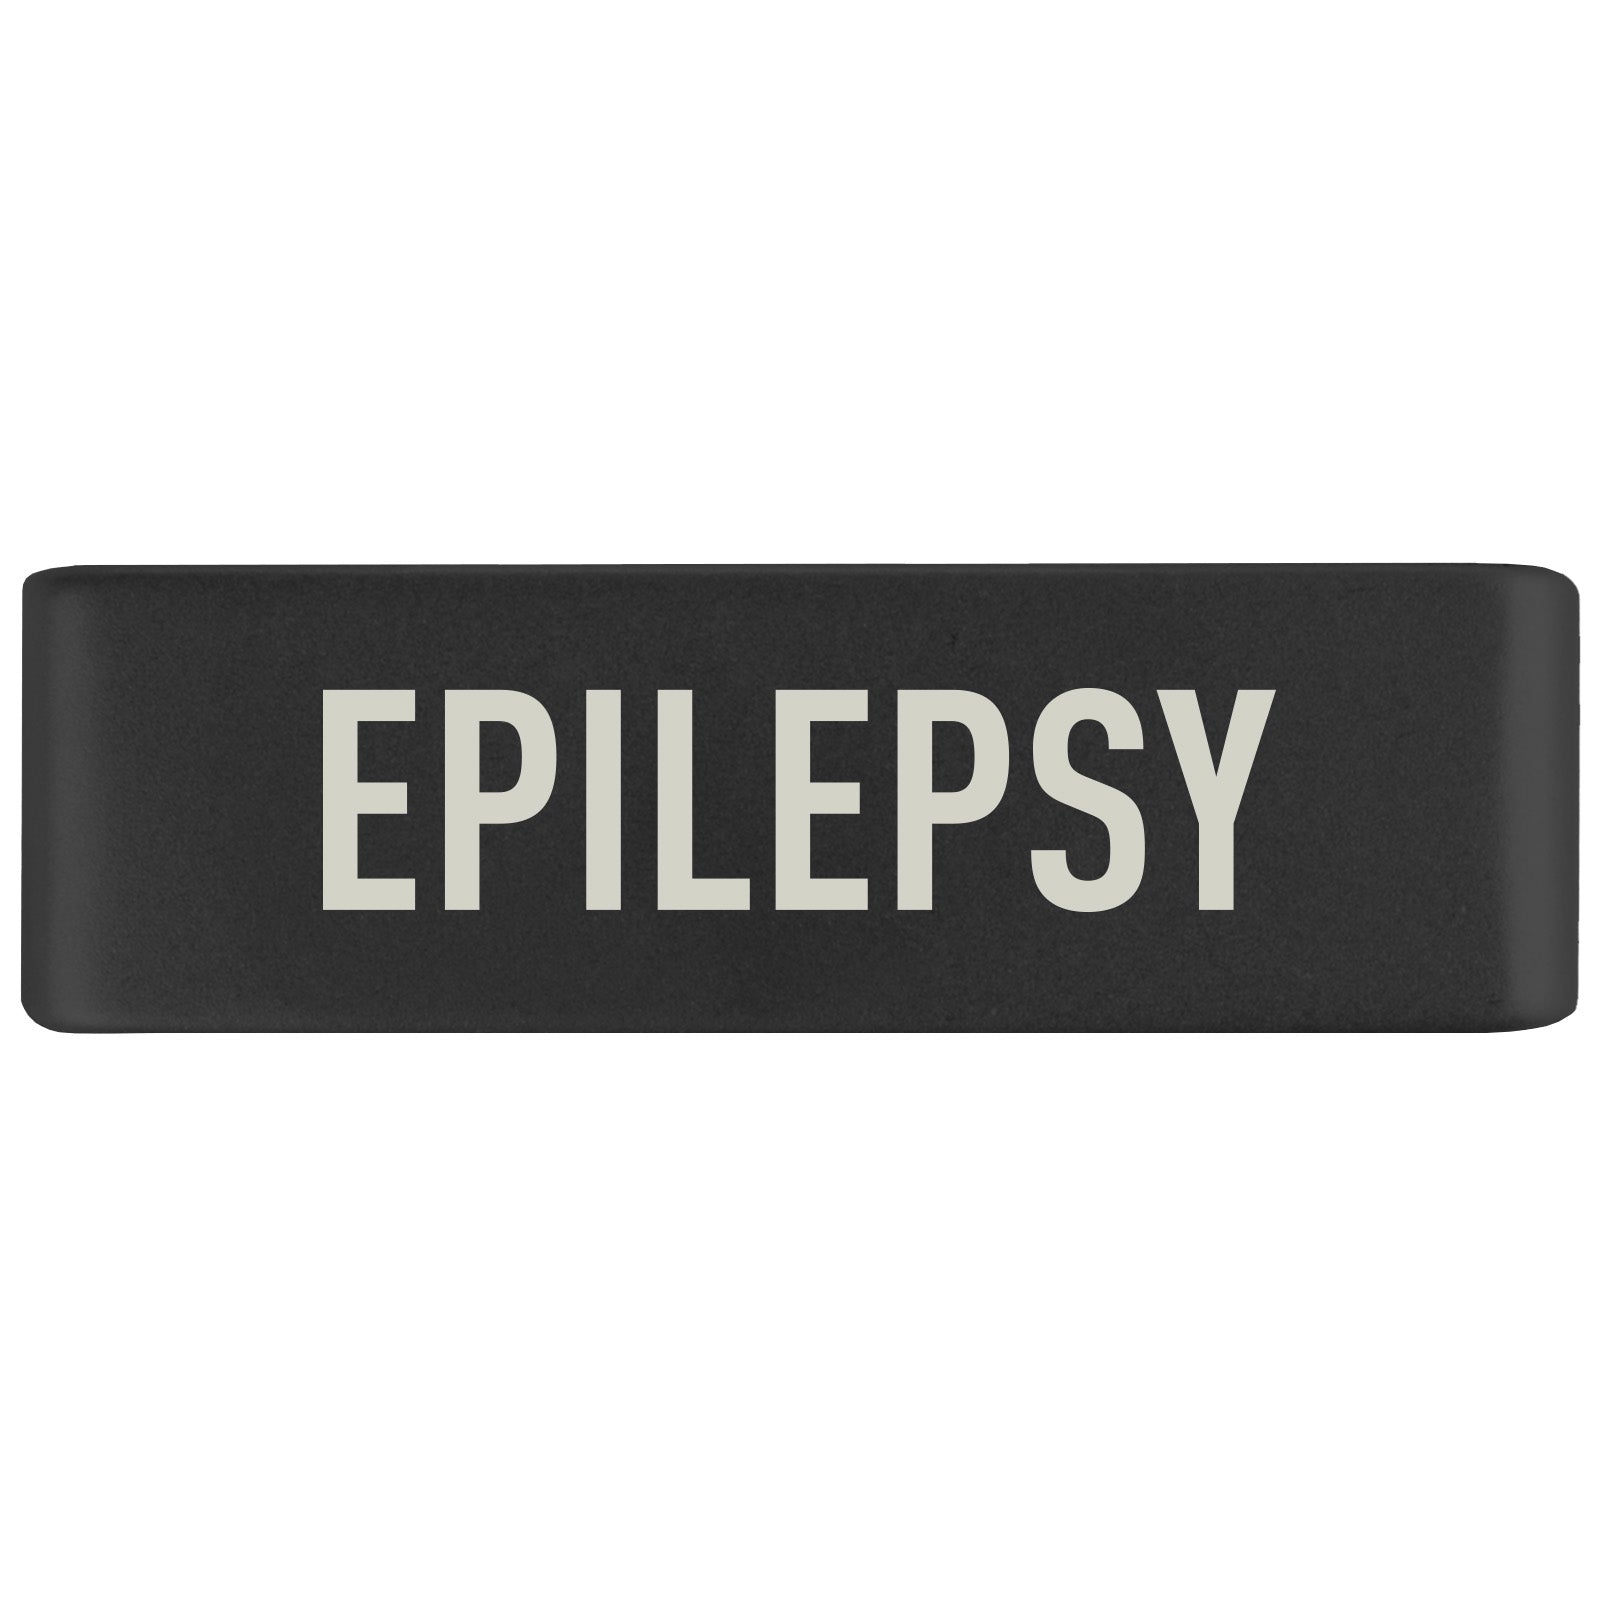 Epilepsy Badge Badge 19mm - ROAD iD